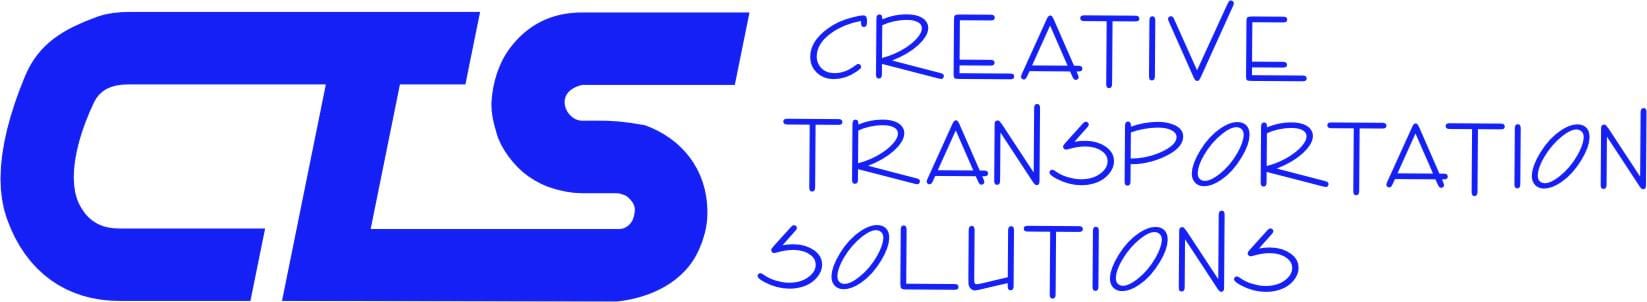 CTS-Full-Logo-high-resolution